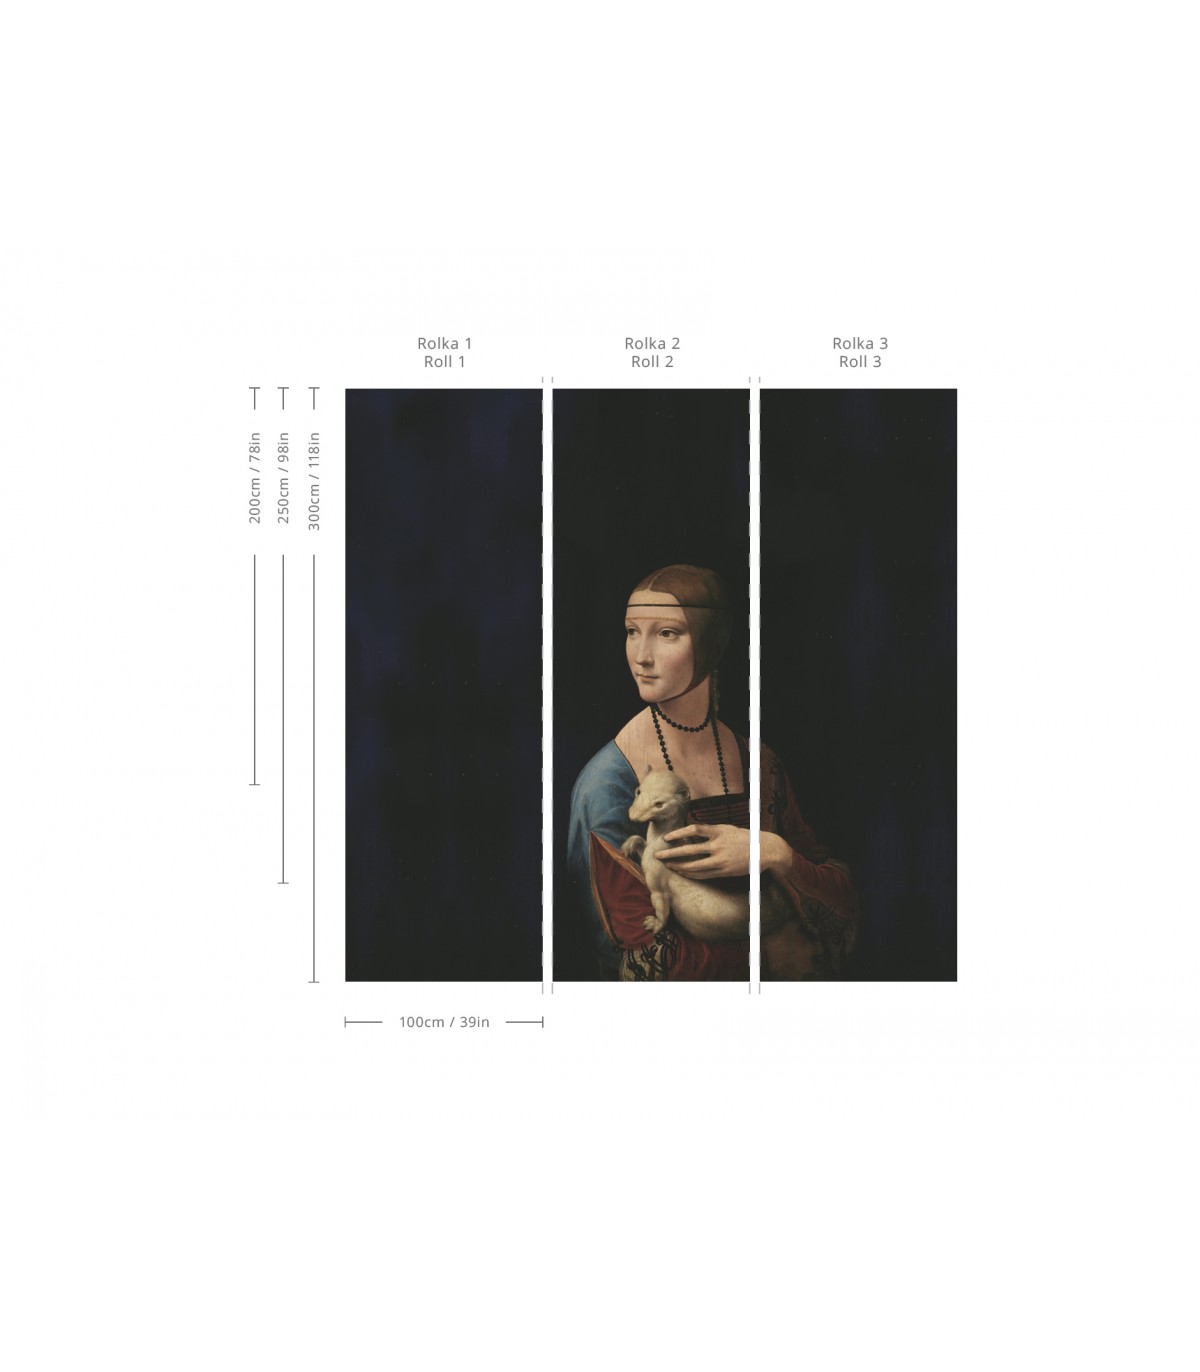 Lady with an Ermine tapete - Wallcolors  - Exklusive Hintergrundbilder